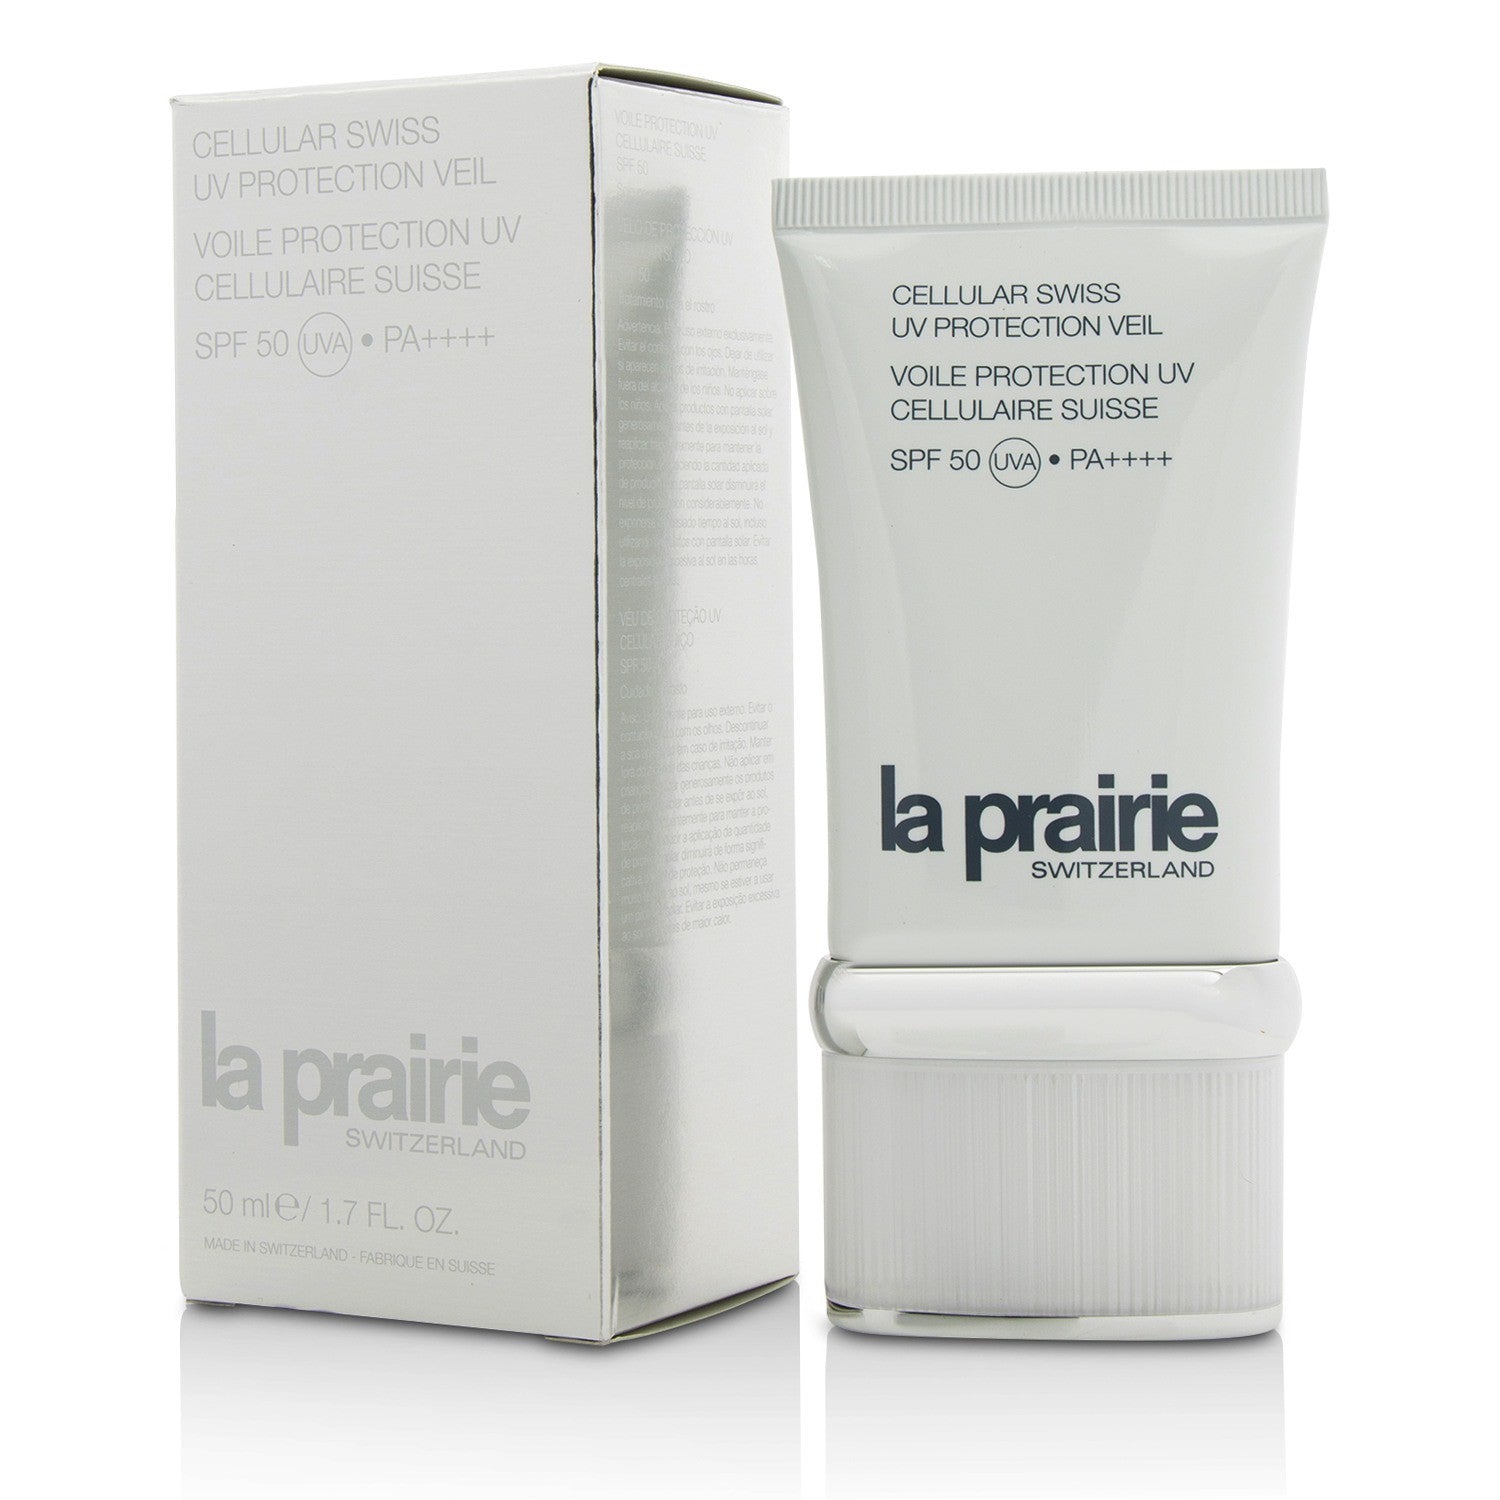 LA PRAIRIE - Cellular Swiss UV Protection Veil SPF50 PA+ - 50ml/1.7oz 3P's Inclusive Beauty